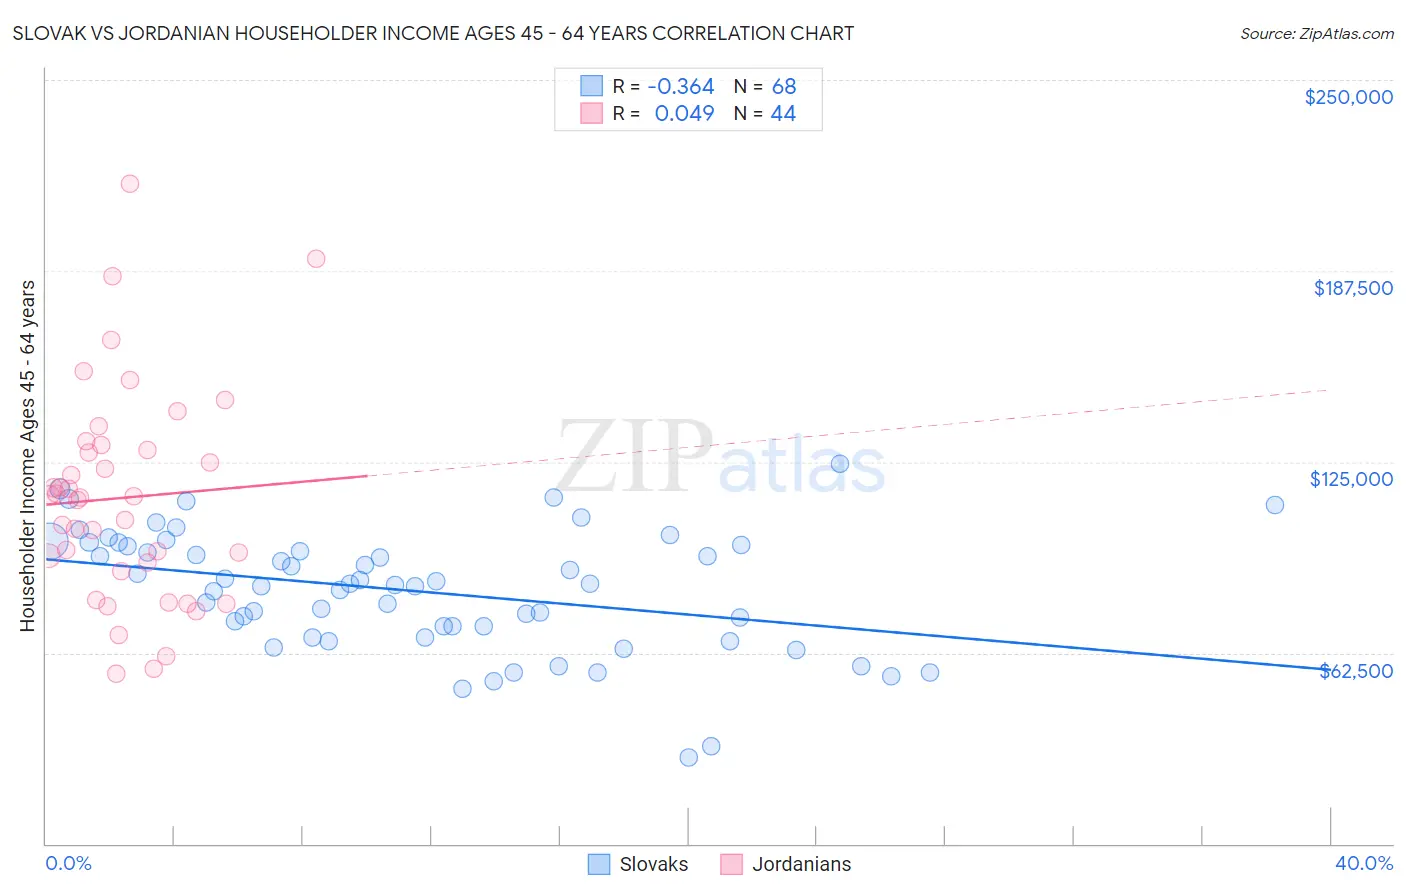 Slovak vs Jordanian Householder Income Ages 45 - 64 years